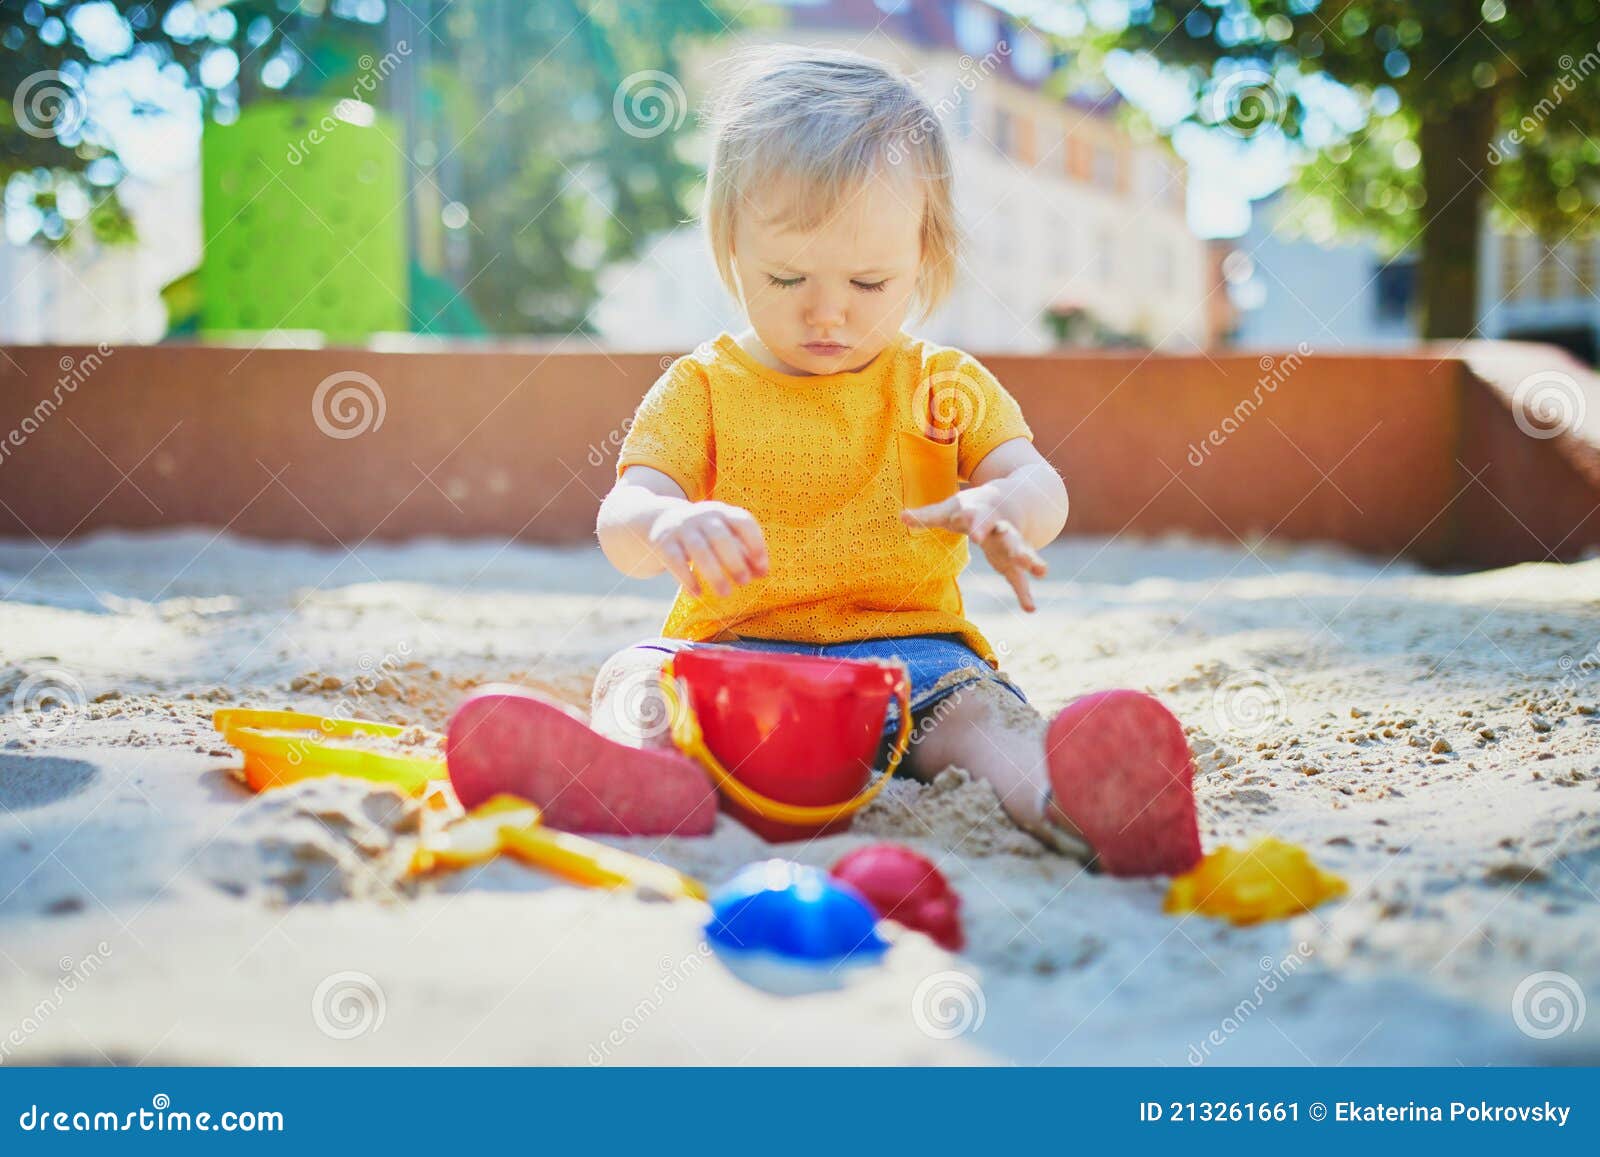 adorable little girl having fun on playground in sandpit